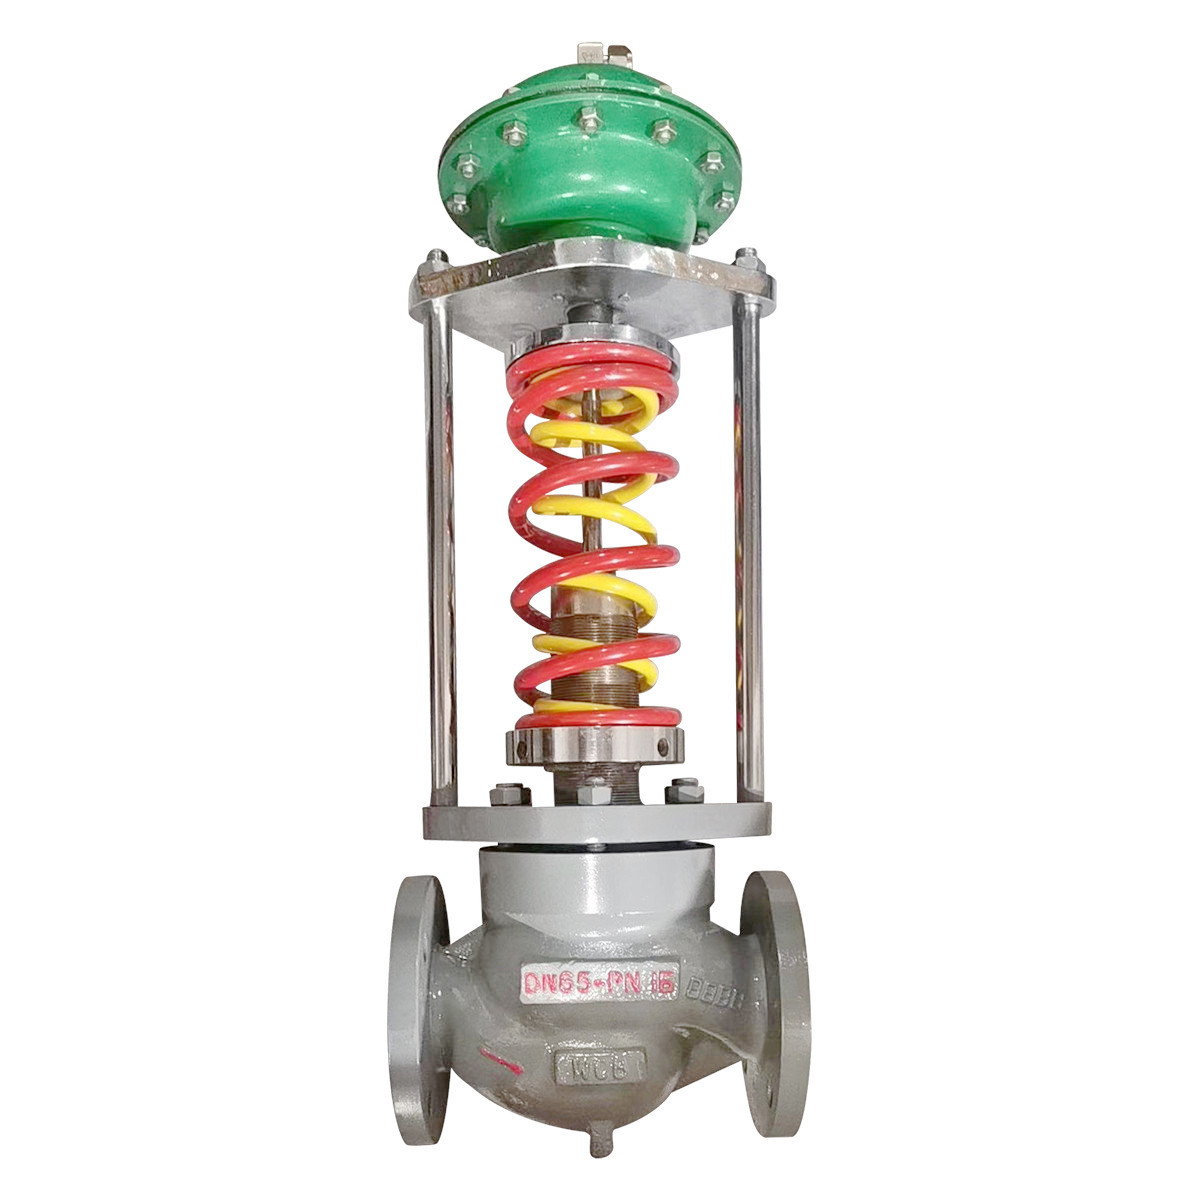 Self-operated pressure control valve